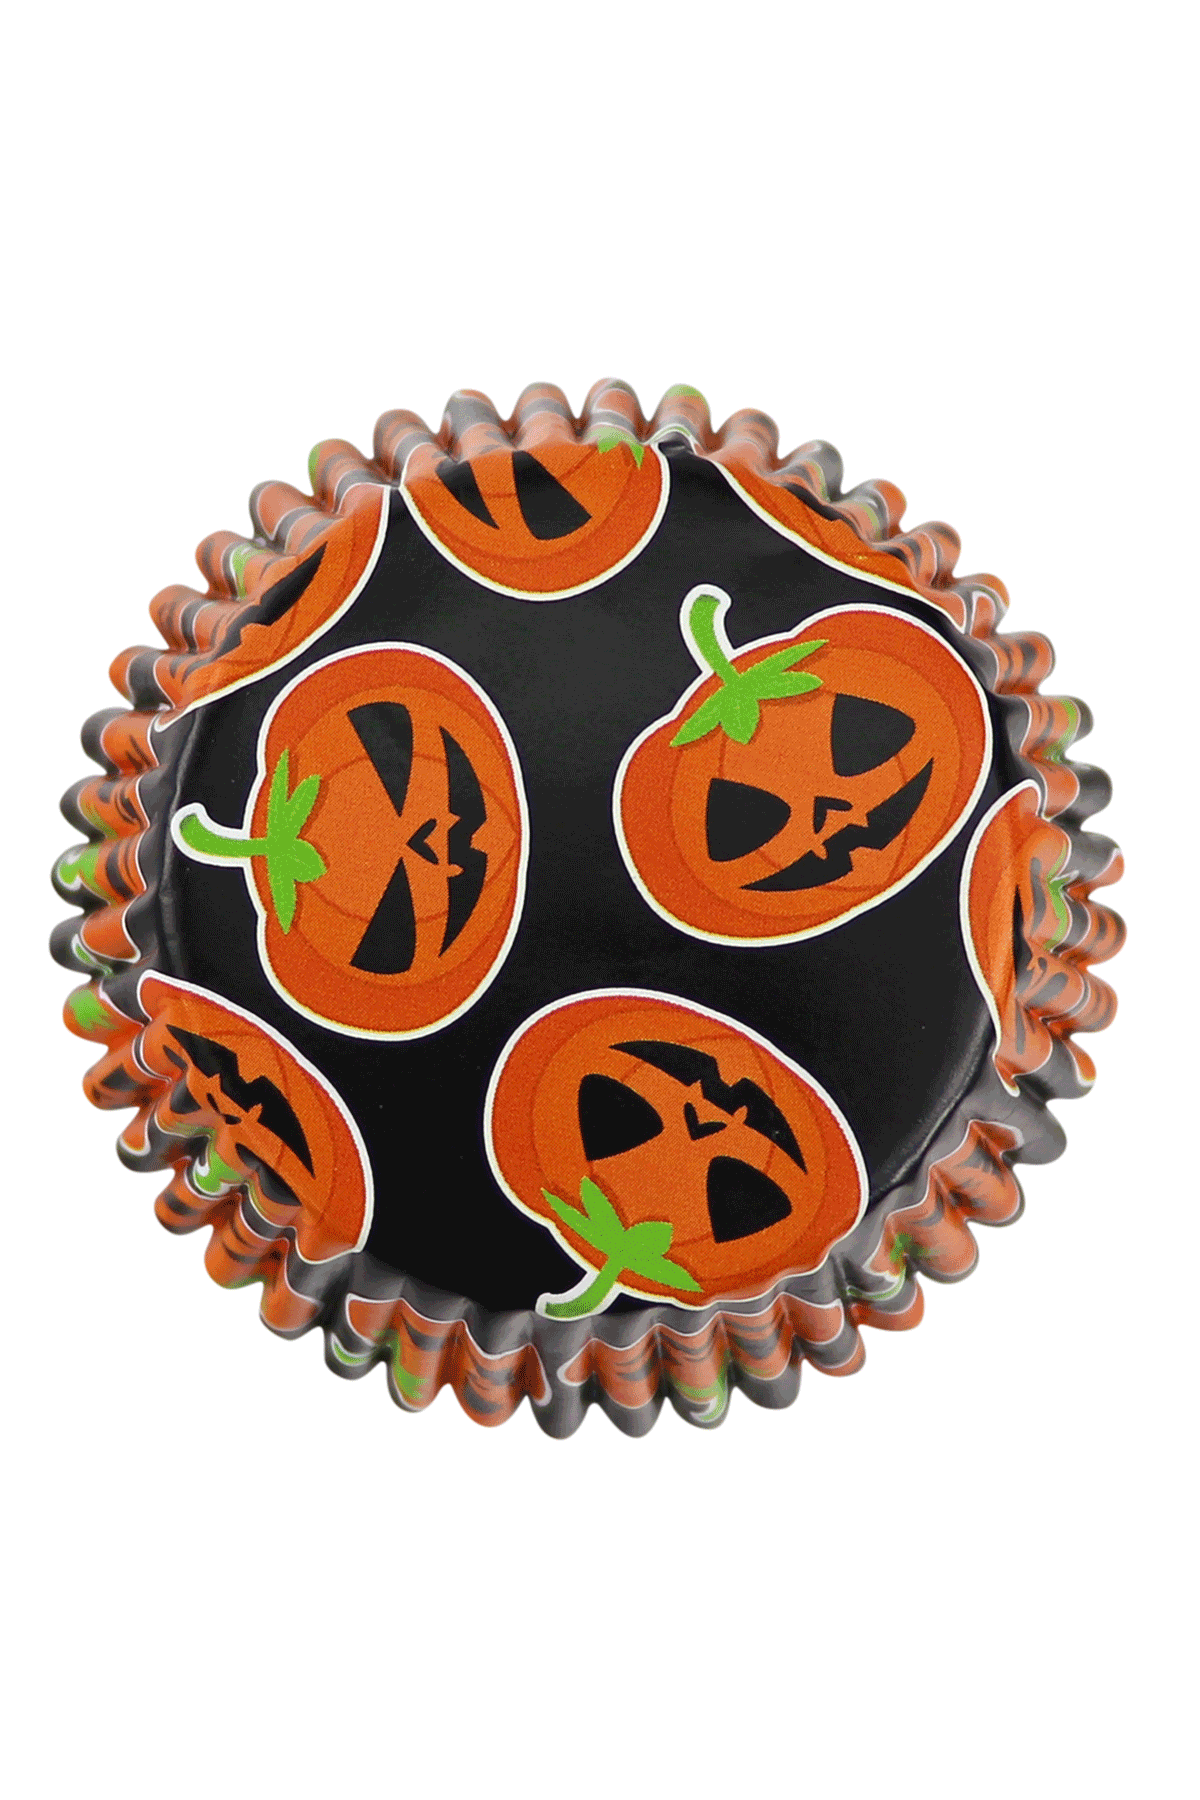 Cupcake Cases - Halloween Pumpkins - 30 Pack Cupcake Cases PME